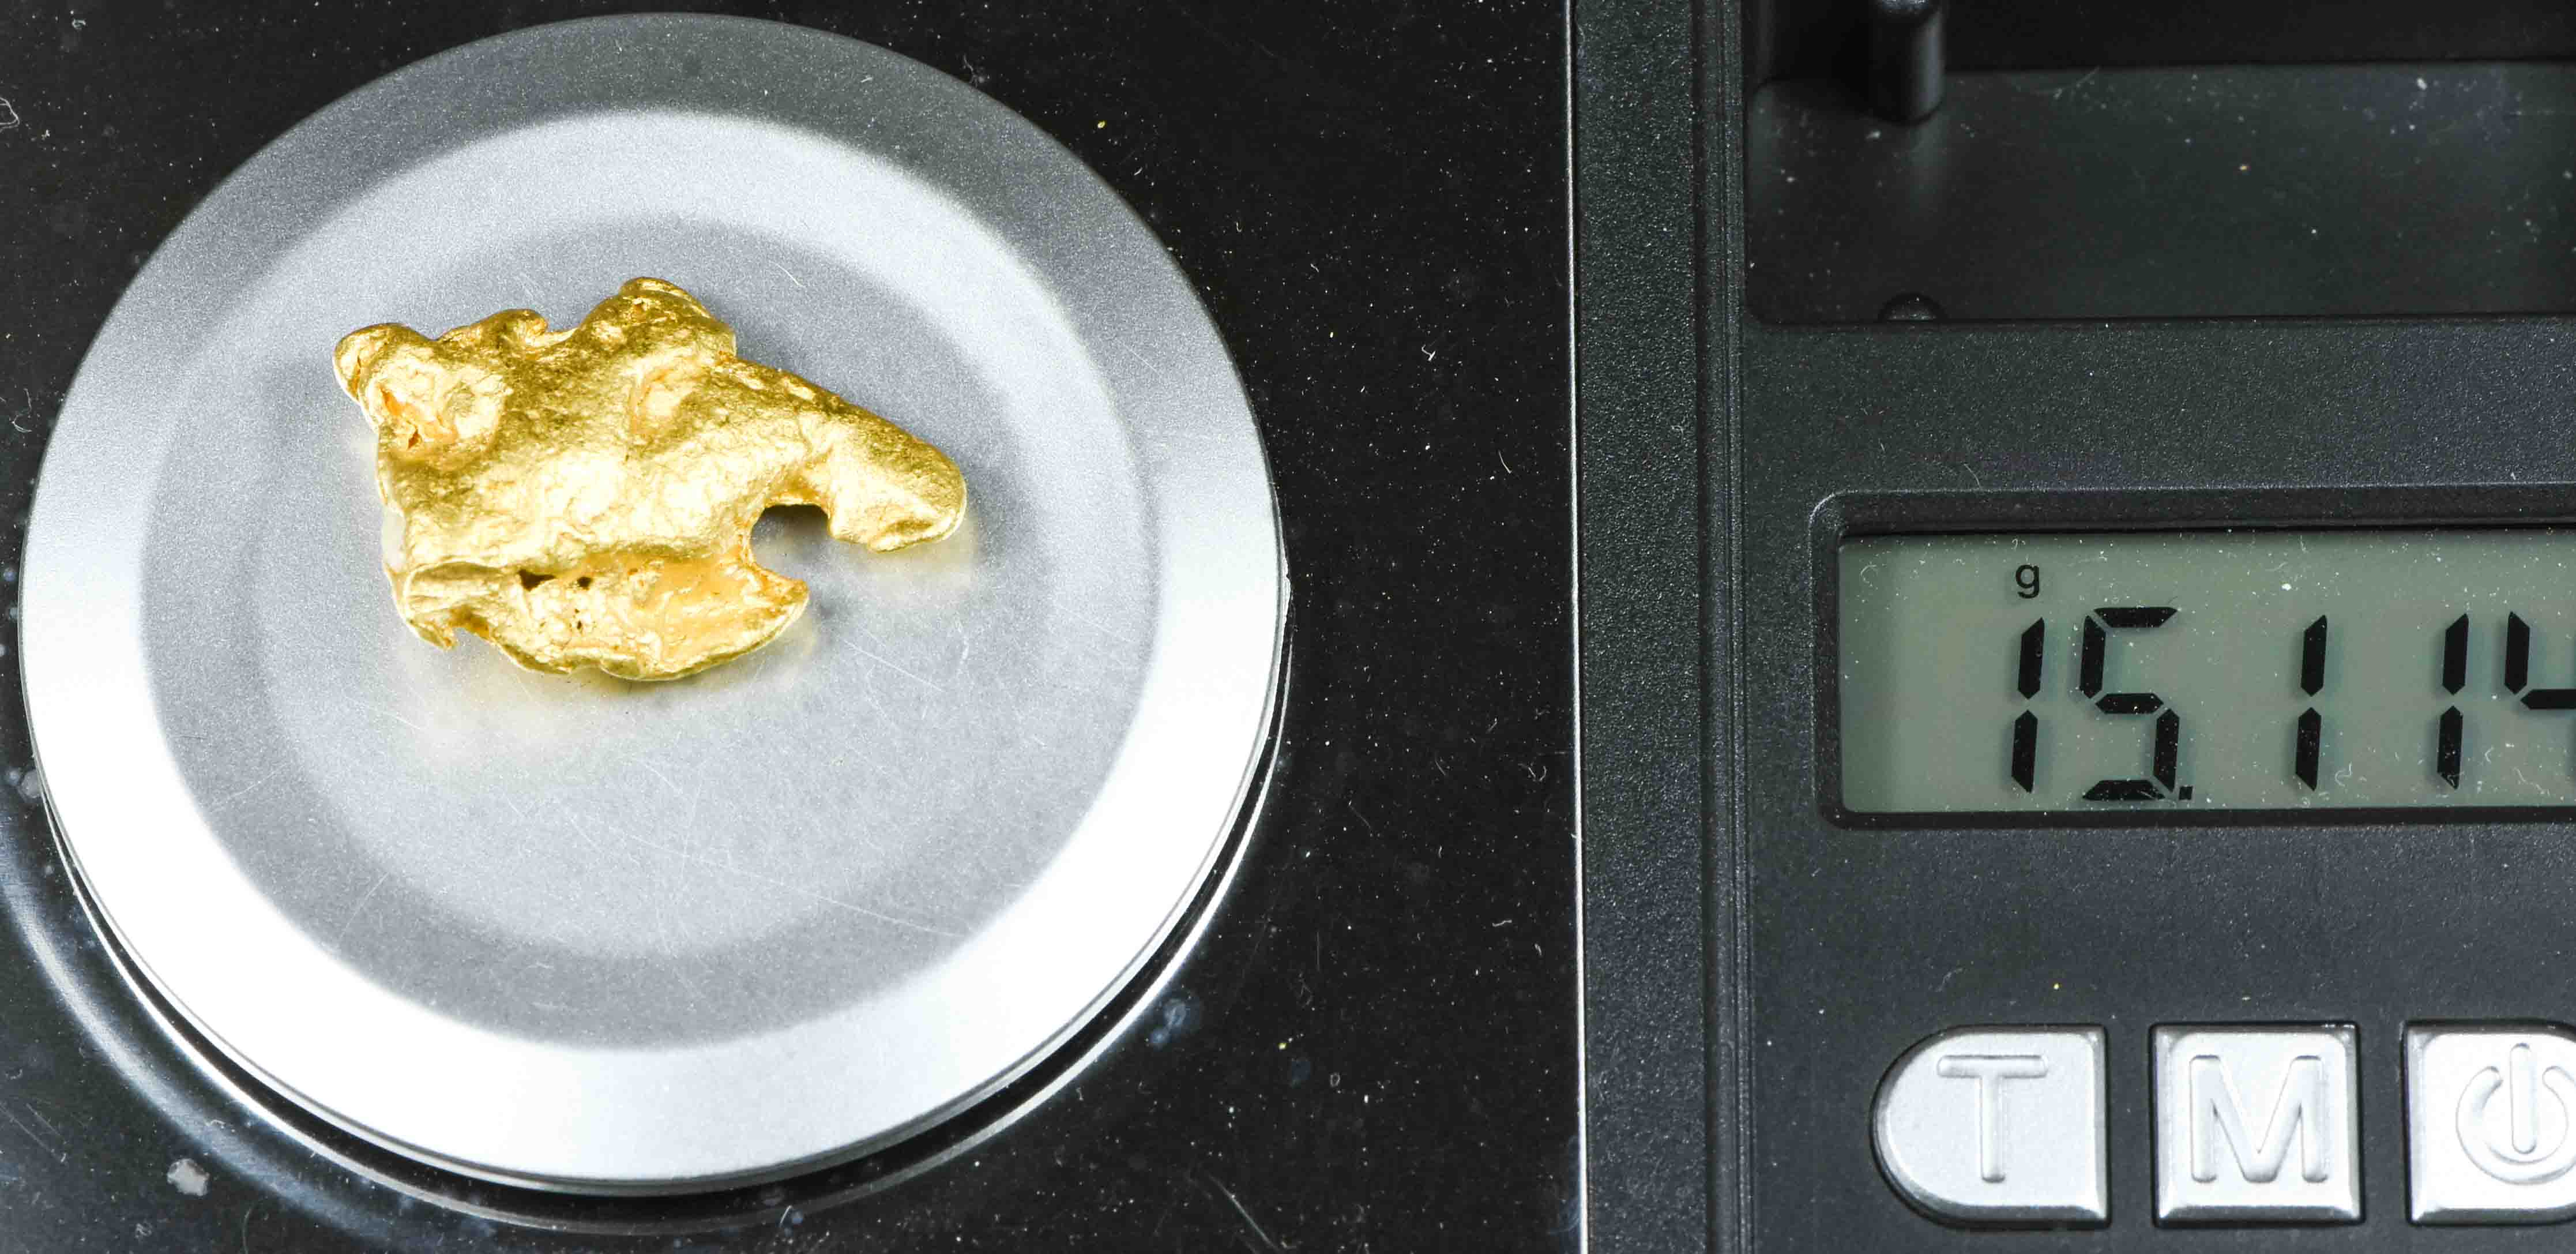 #1196 Natural Gold Nugget Australian 15.11 Grams Genuine